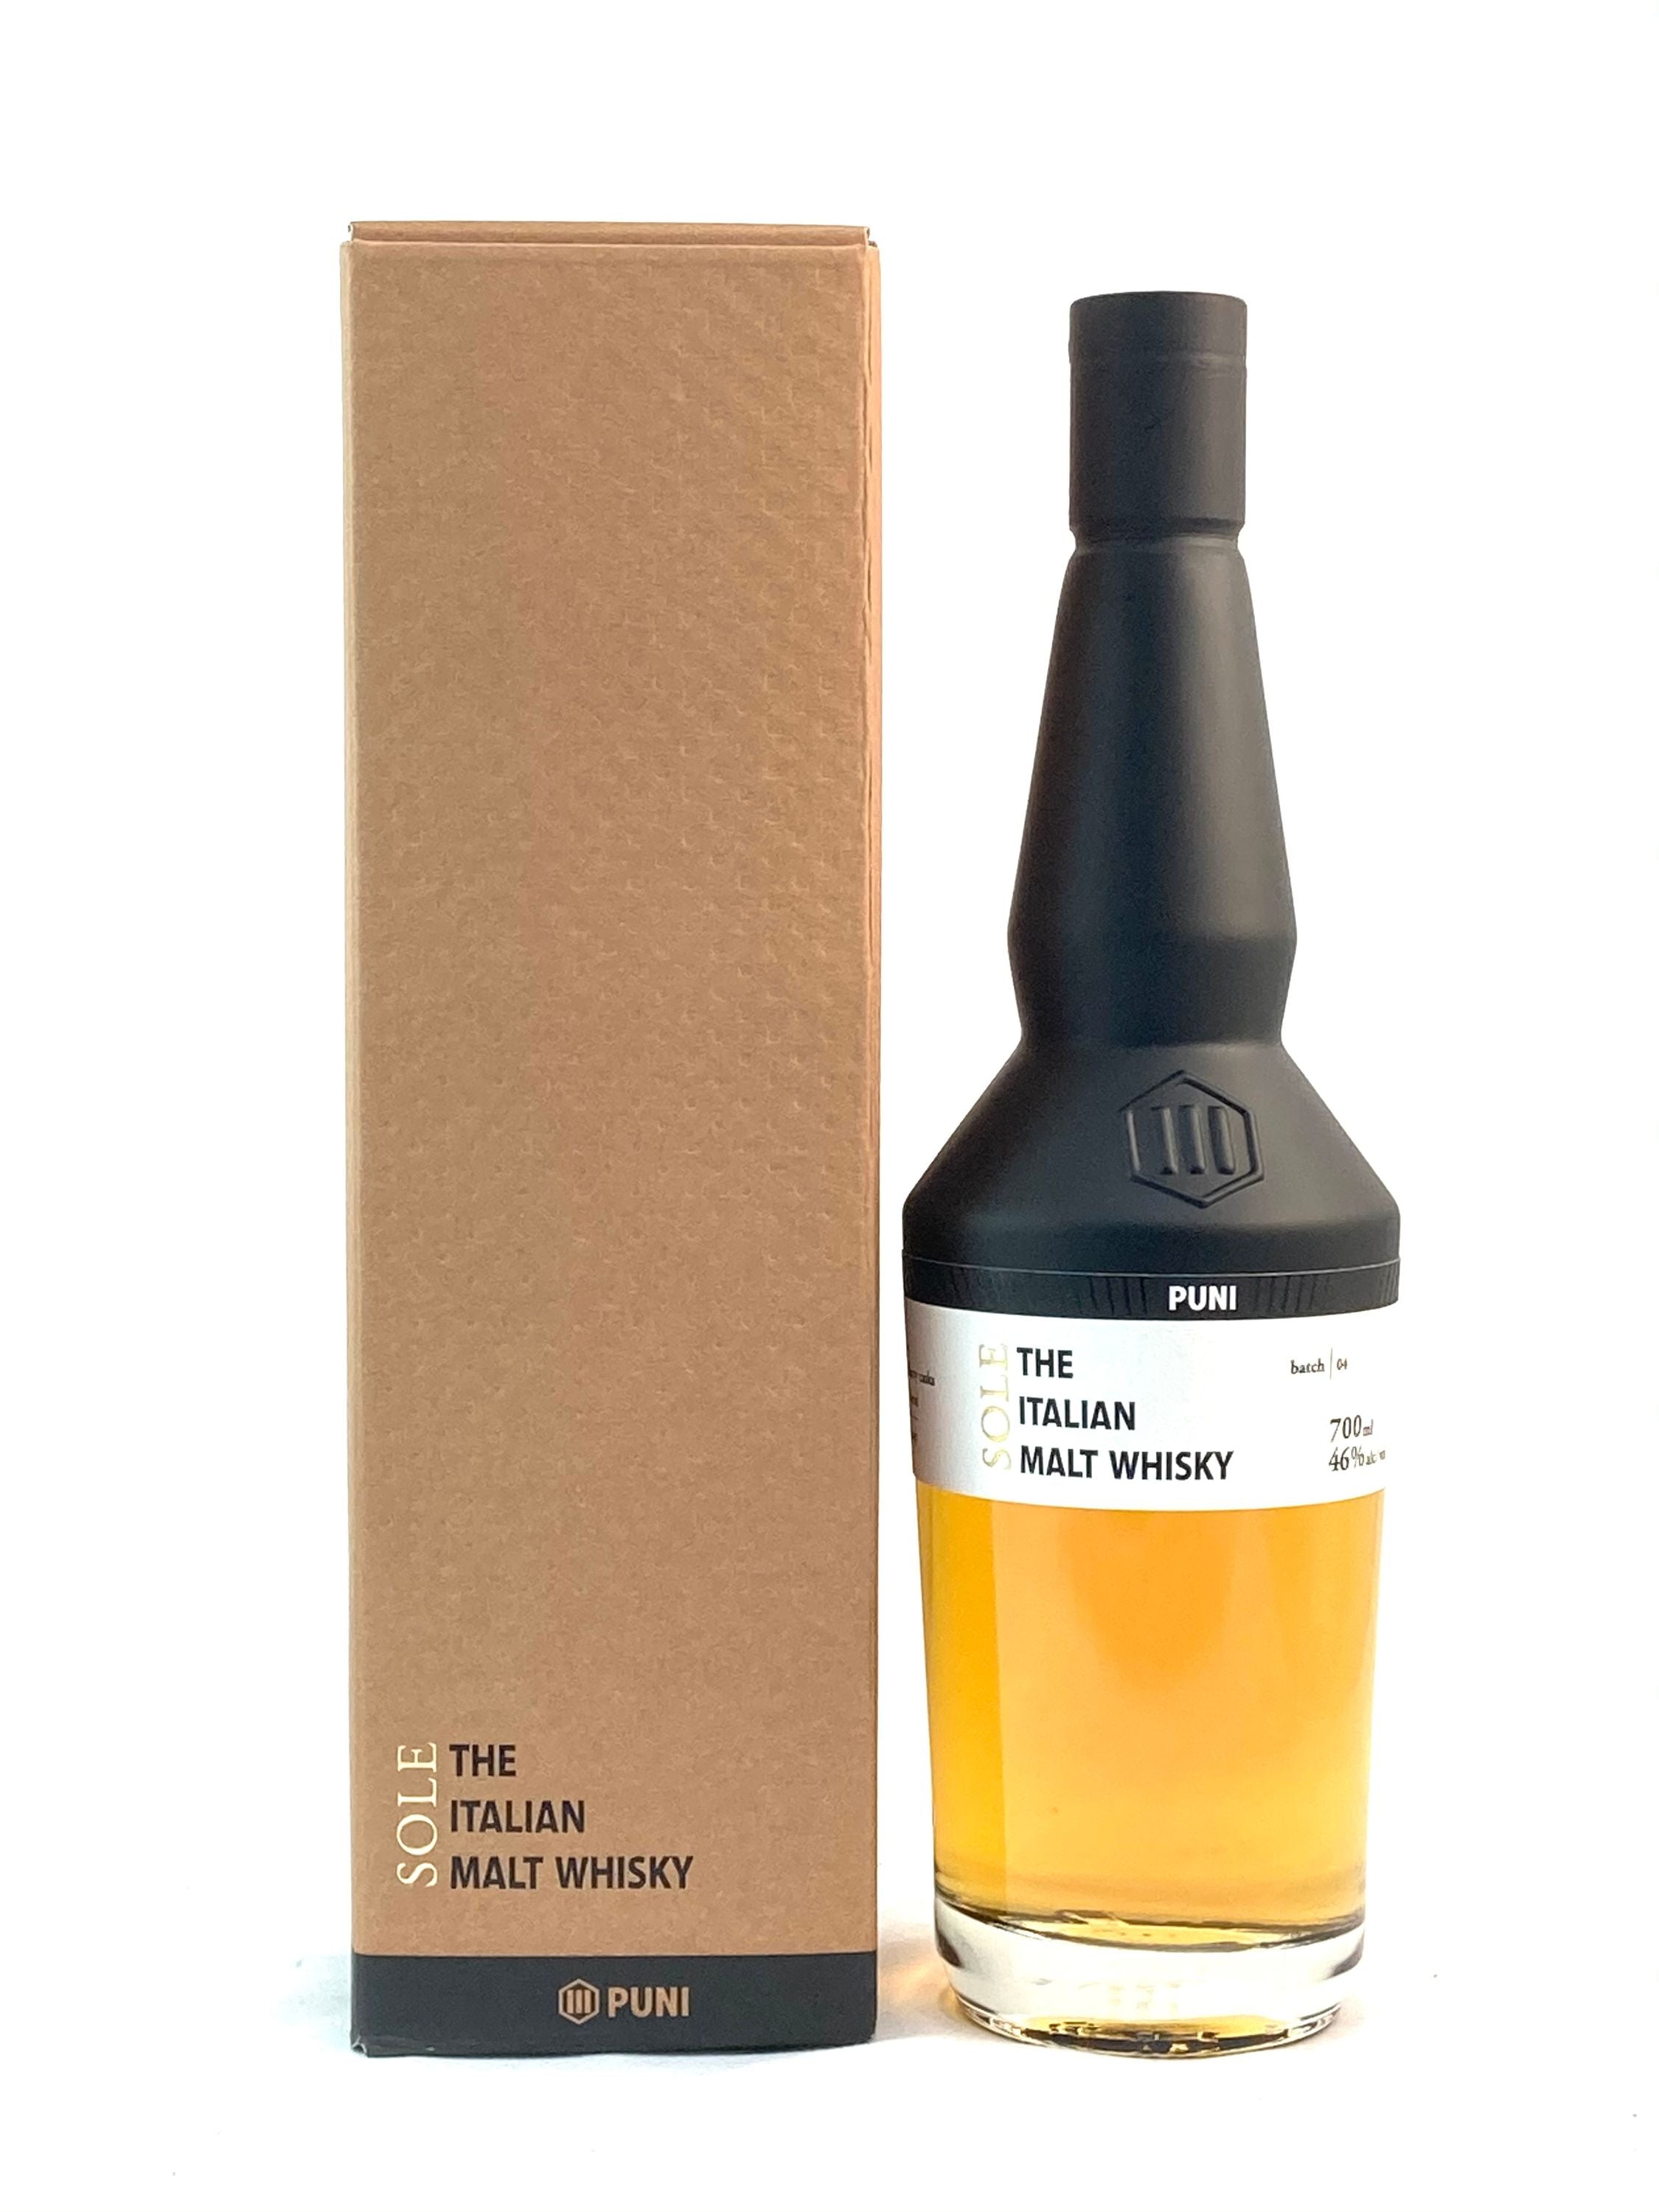 Puni Sole Italian Malt Whisky, 0.7l, alc. 46% by volume